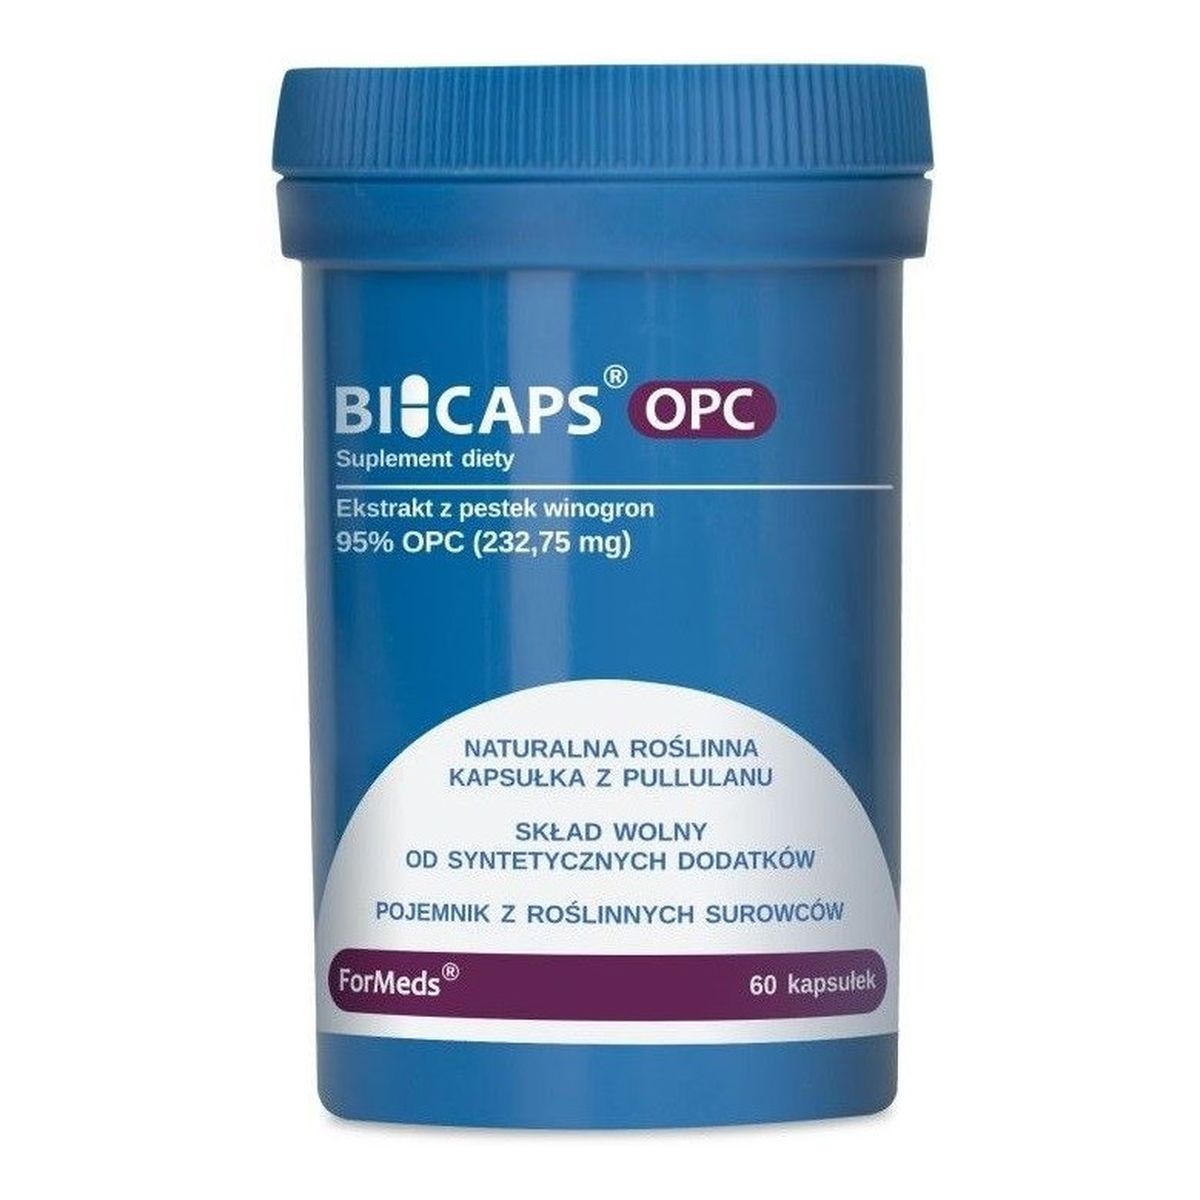 Formeds Bicaps OPC ekstrakt z pestek winogron suplement diety 60 Kapsułek